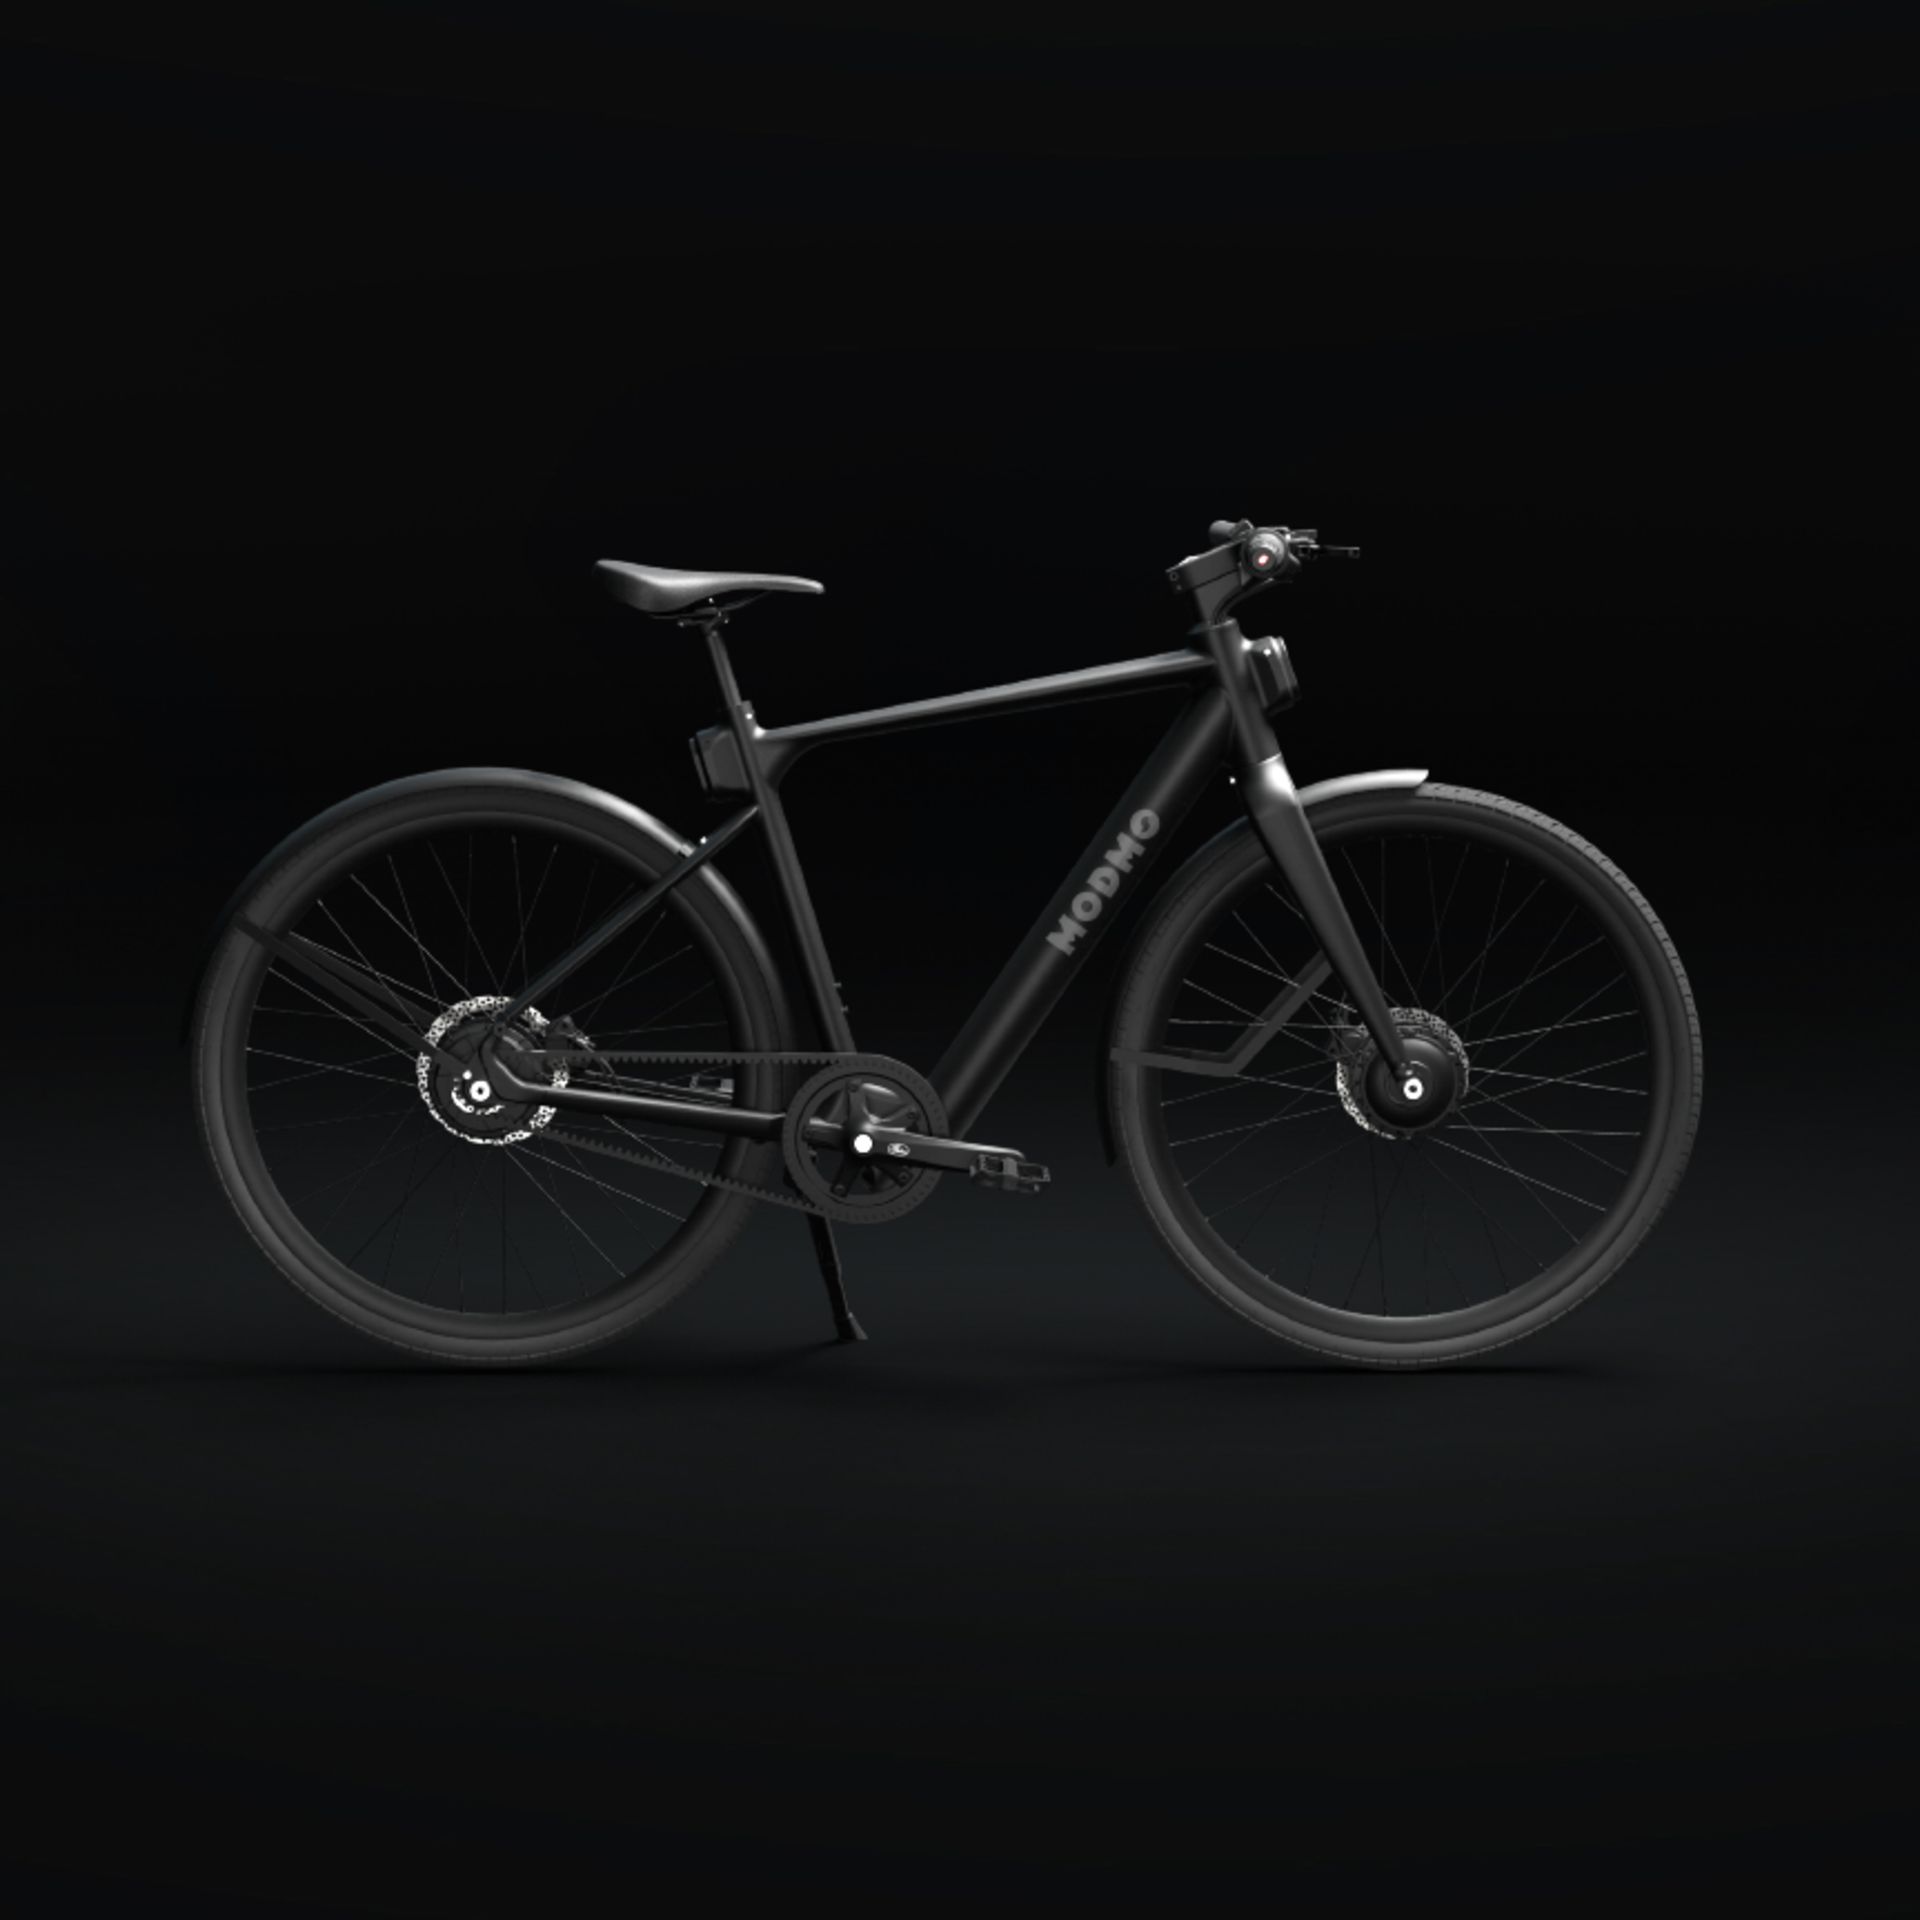 Modmo Saigon+ Electric Bicycle - RRP £2800 - Size S (Rider: 140-155cm) - Image 4 of 15